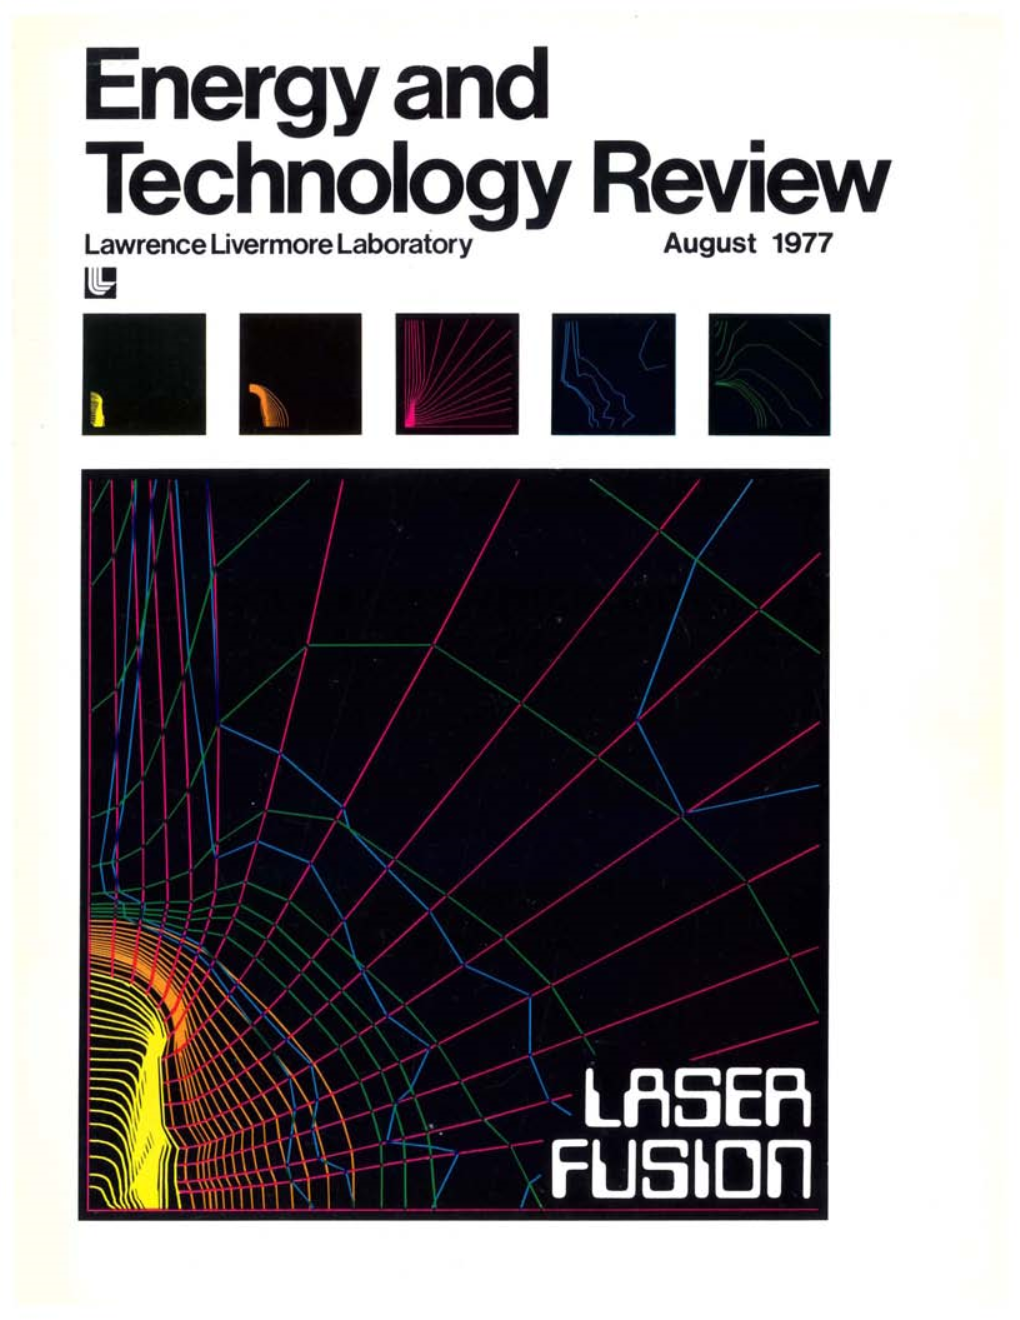 The Solid-State Laser Program